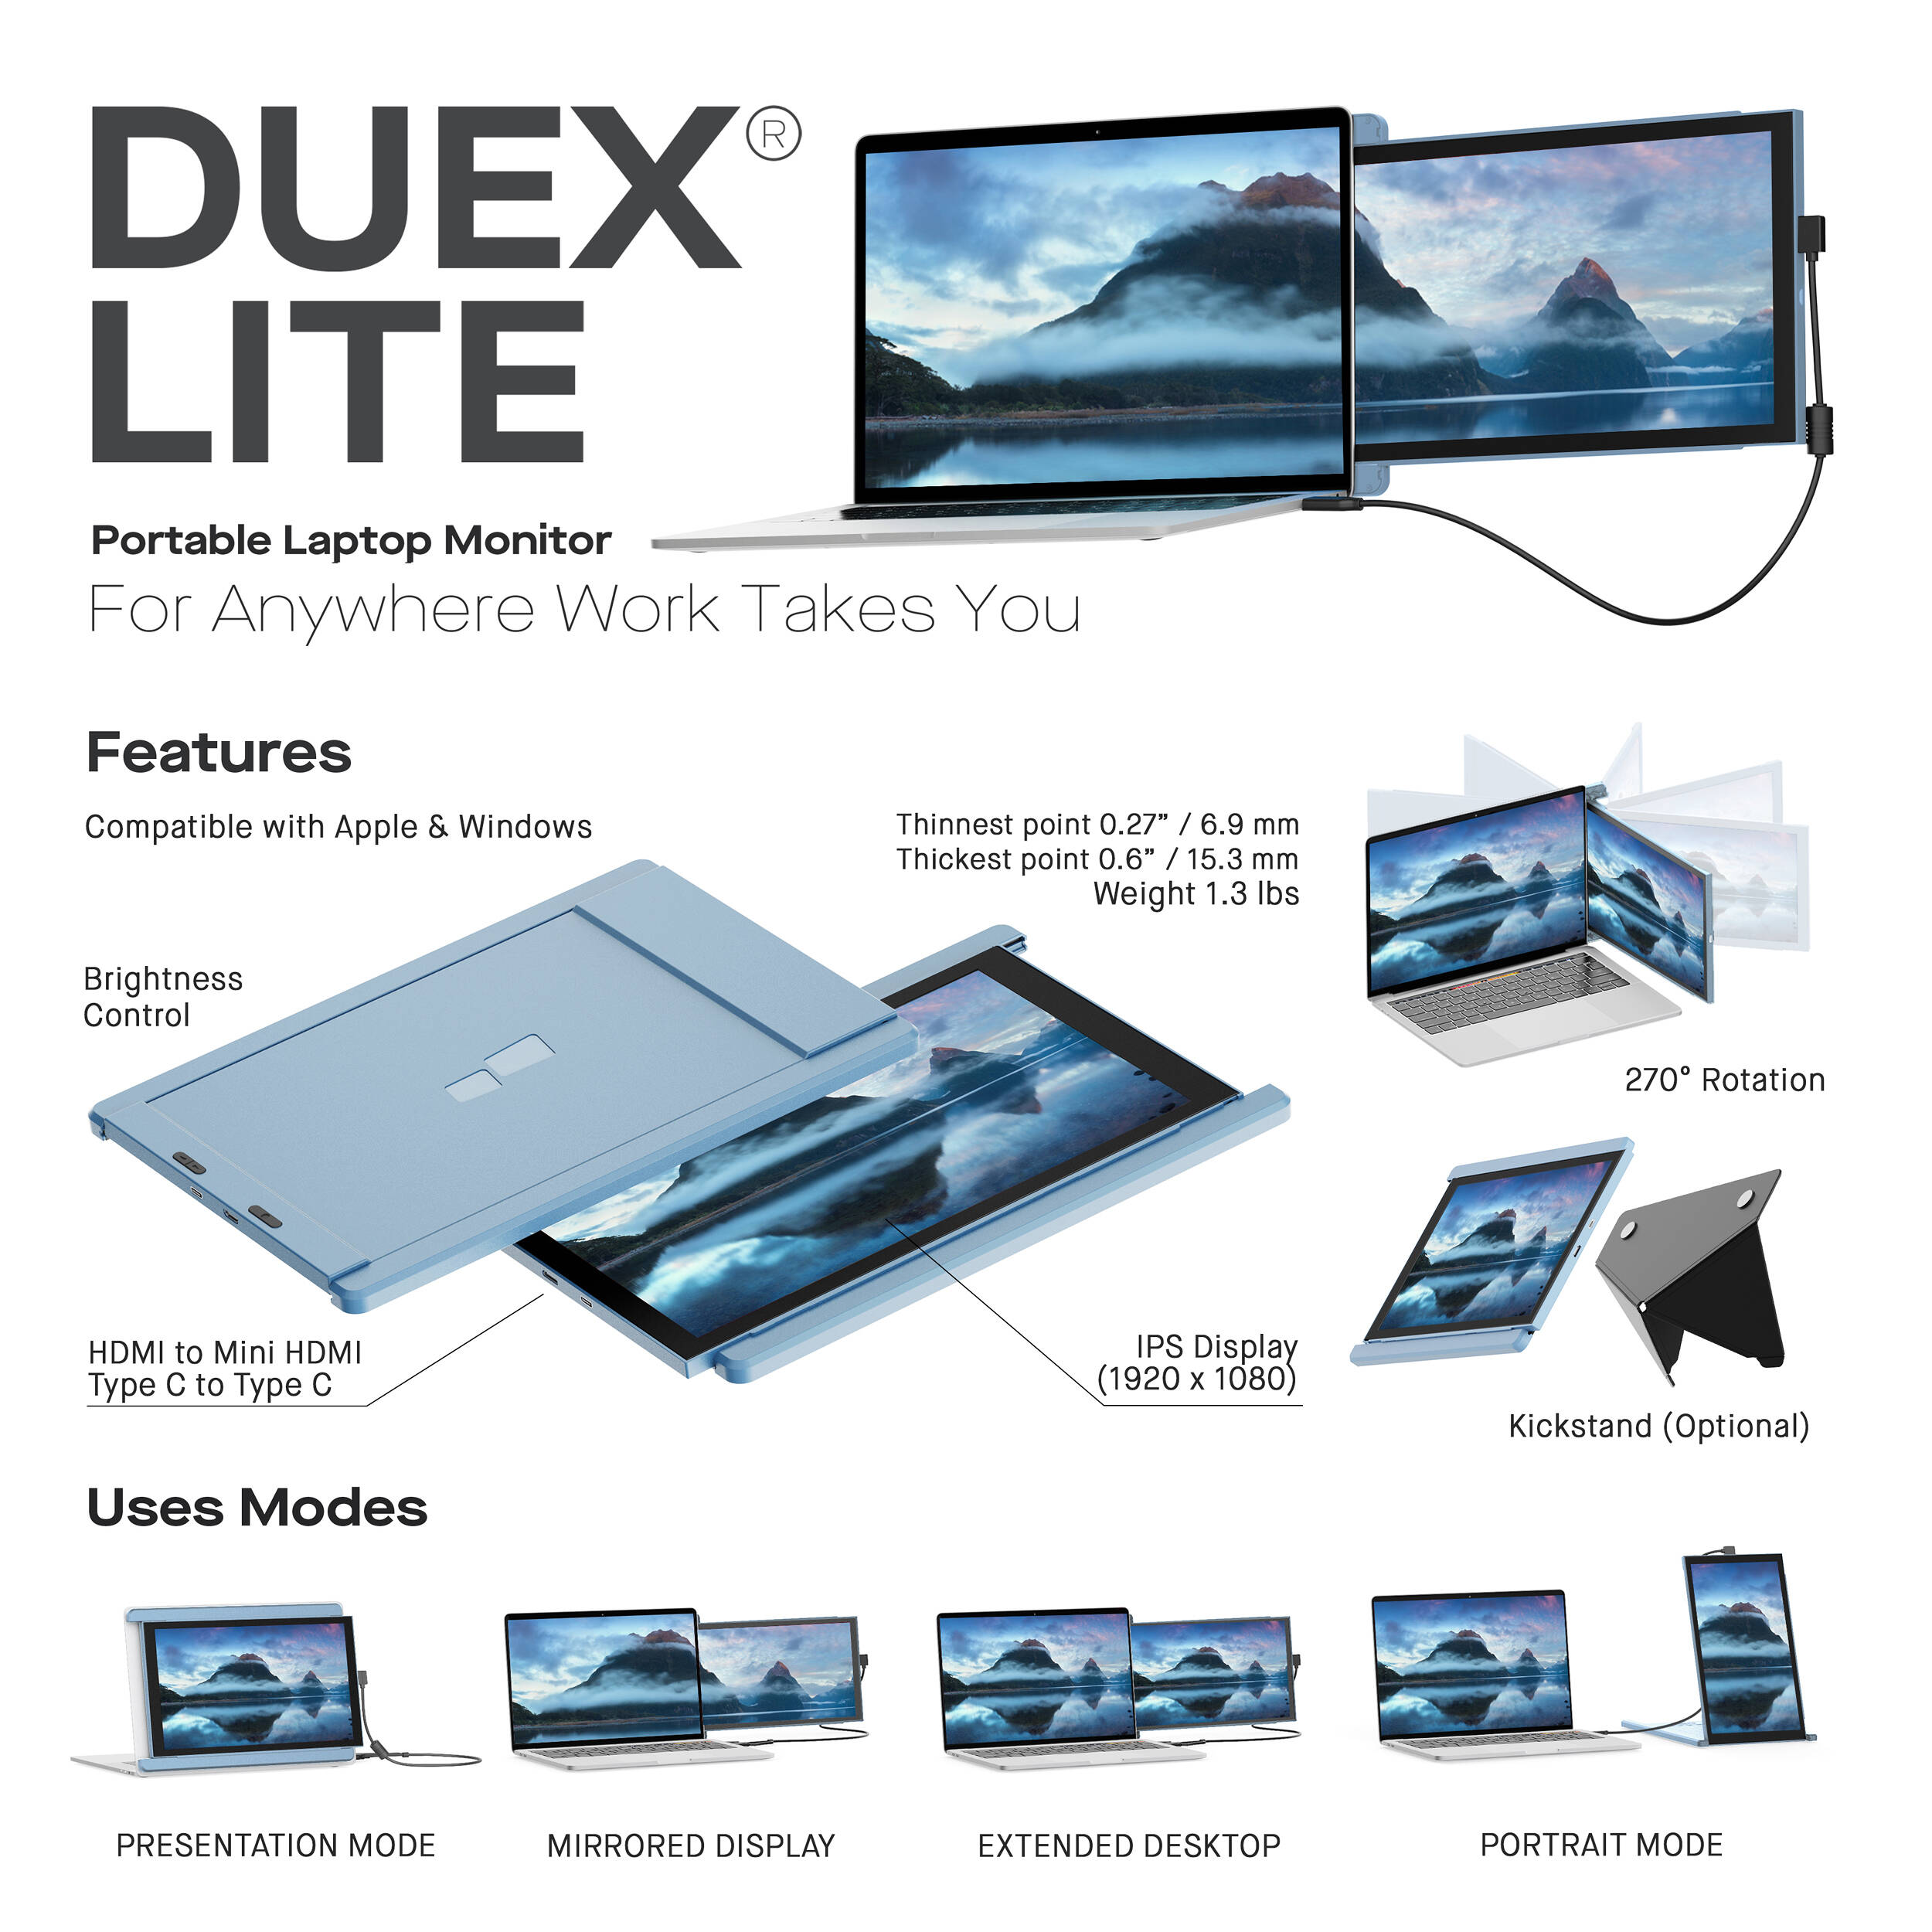 Mobile Pixels MPDUEXLITEBL-RB Duex Lite 12.5" Portable Monitor FHD 1080p Laptop Screen Extender, Blue - Certified Refurbished